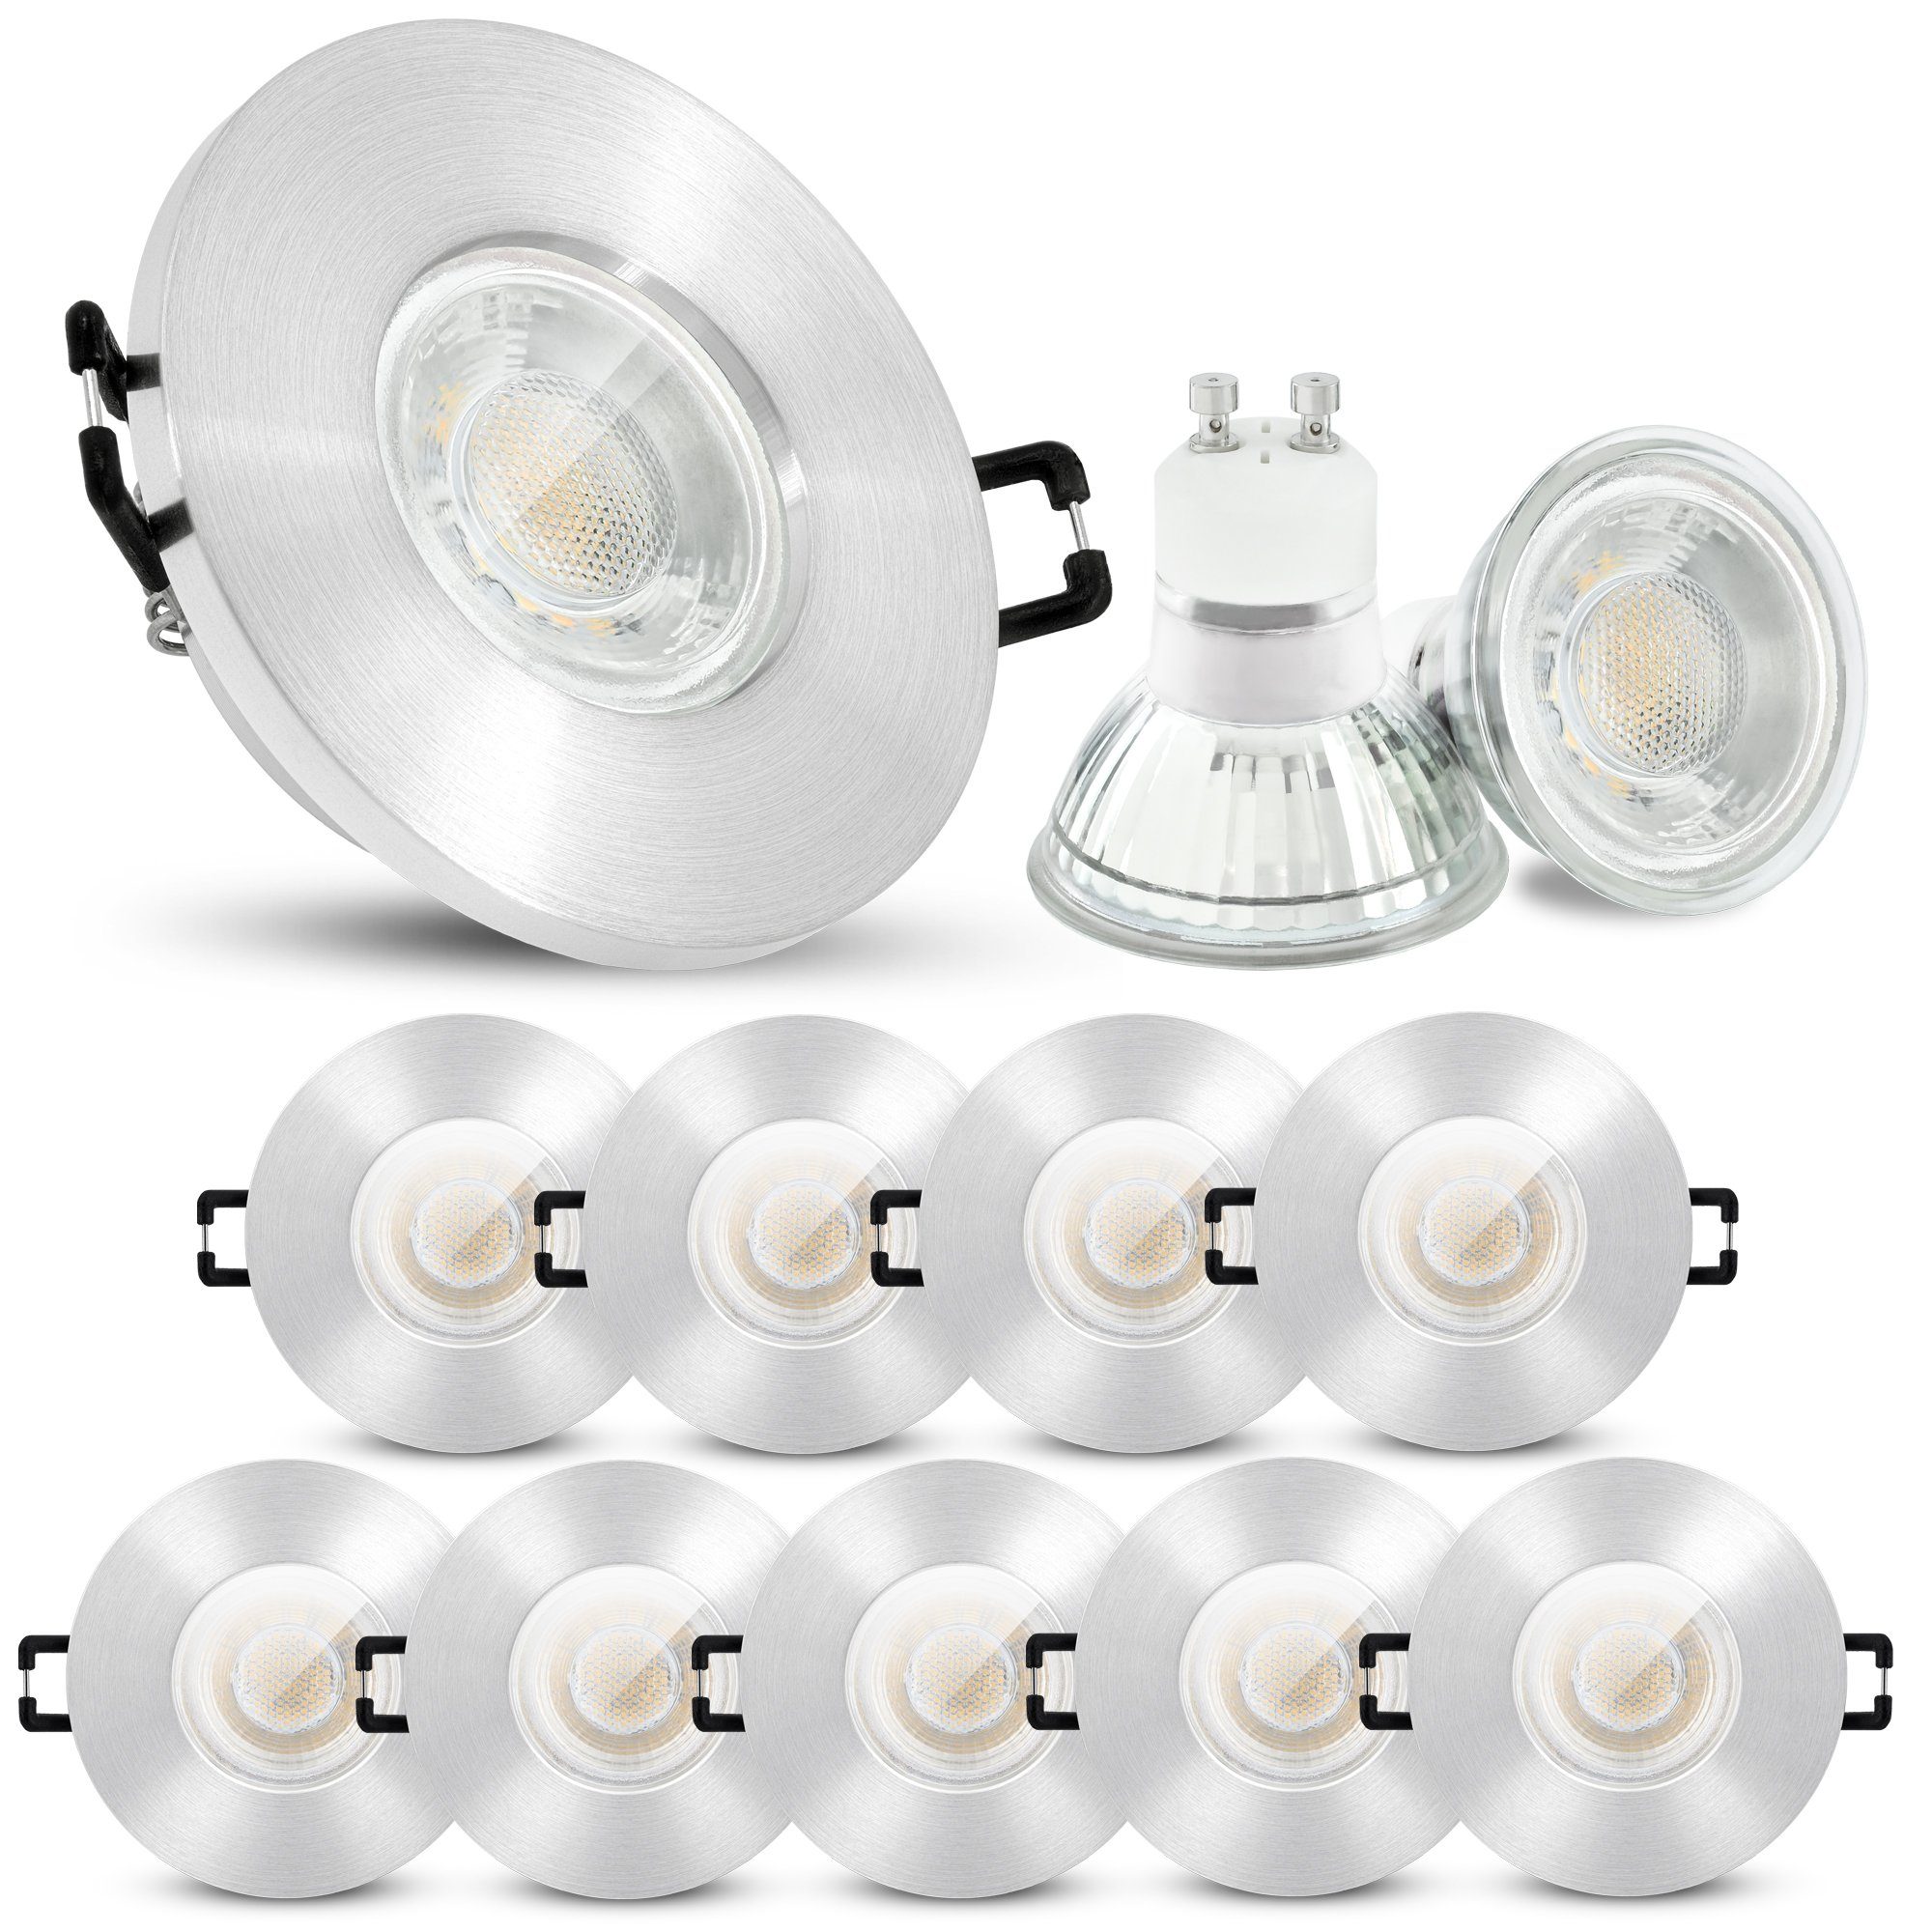 linovum LED Leuchtmittel IP65 LED neutralweiss Einbaustrahler 10er inklusive Set GU10 inklusive, Einbaustrahler 230V, Leuchtmittel 6W